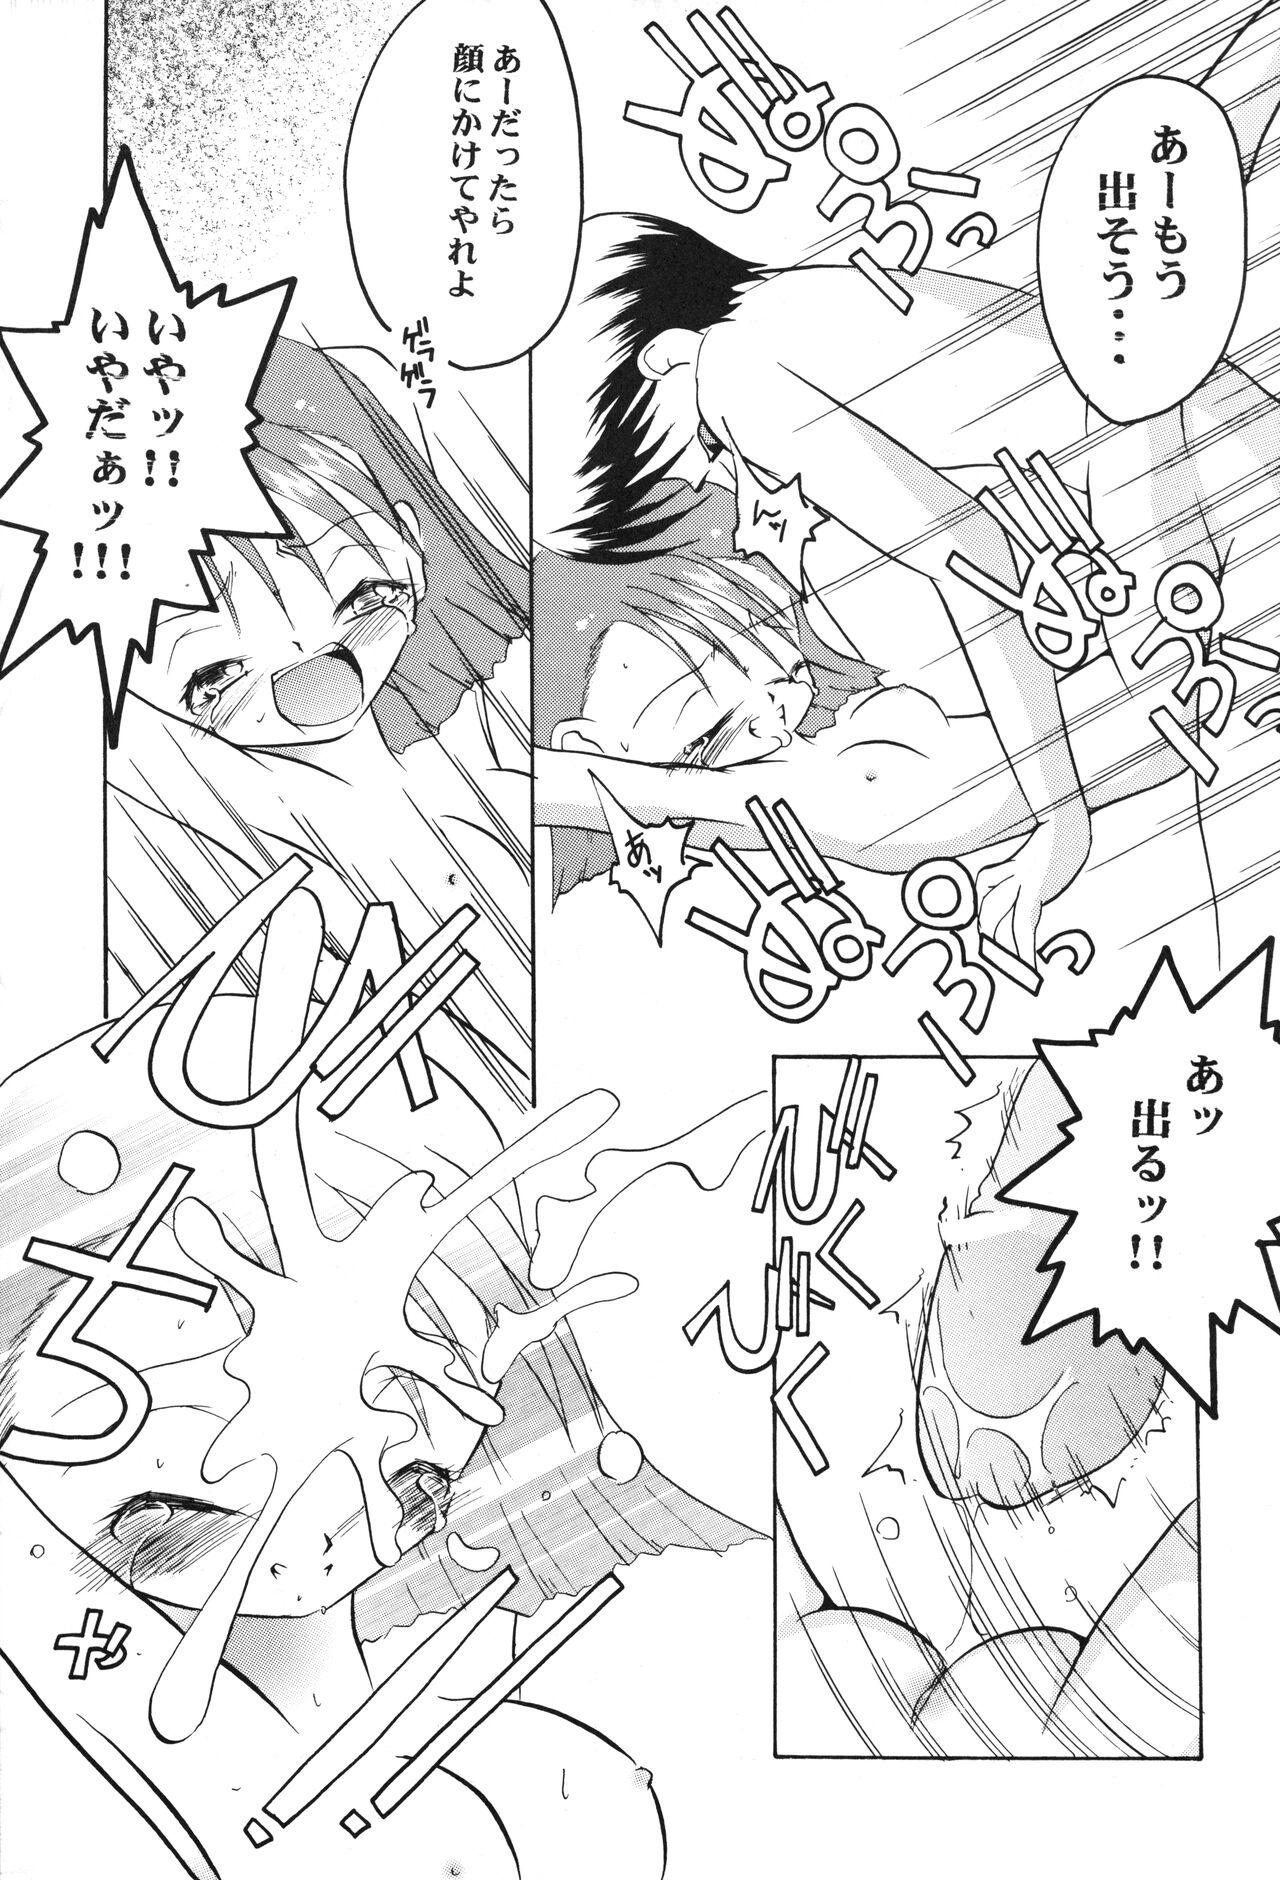 Nudity Get Sweet ”A” Low Phone ”DIGIMON ADVENTURE” - Digimon Cartoon - Page 11